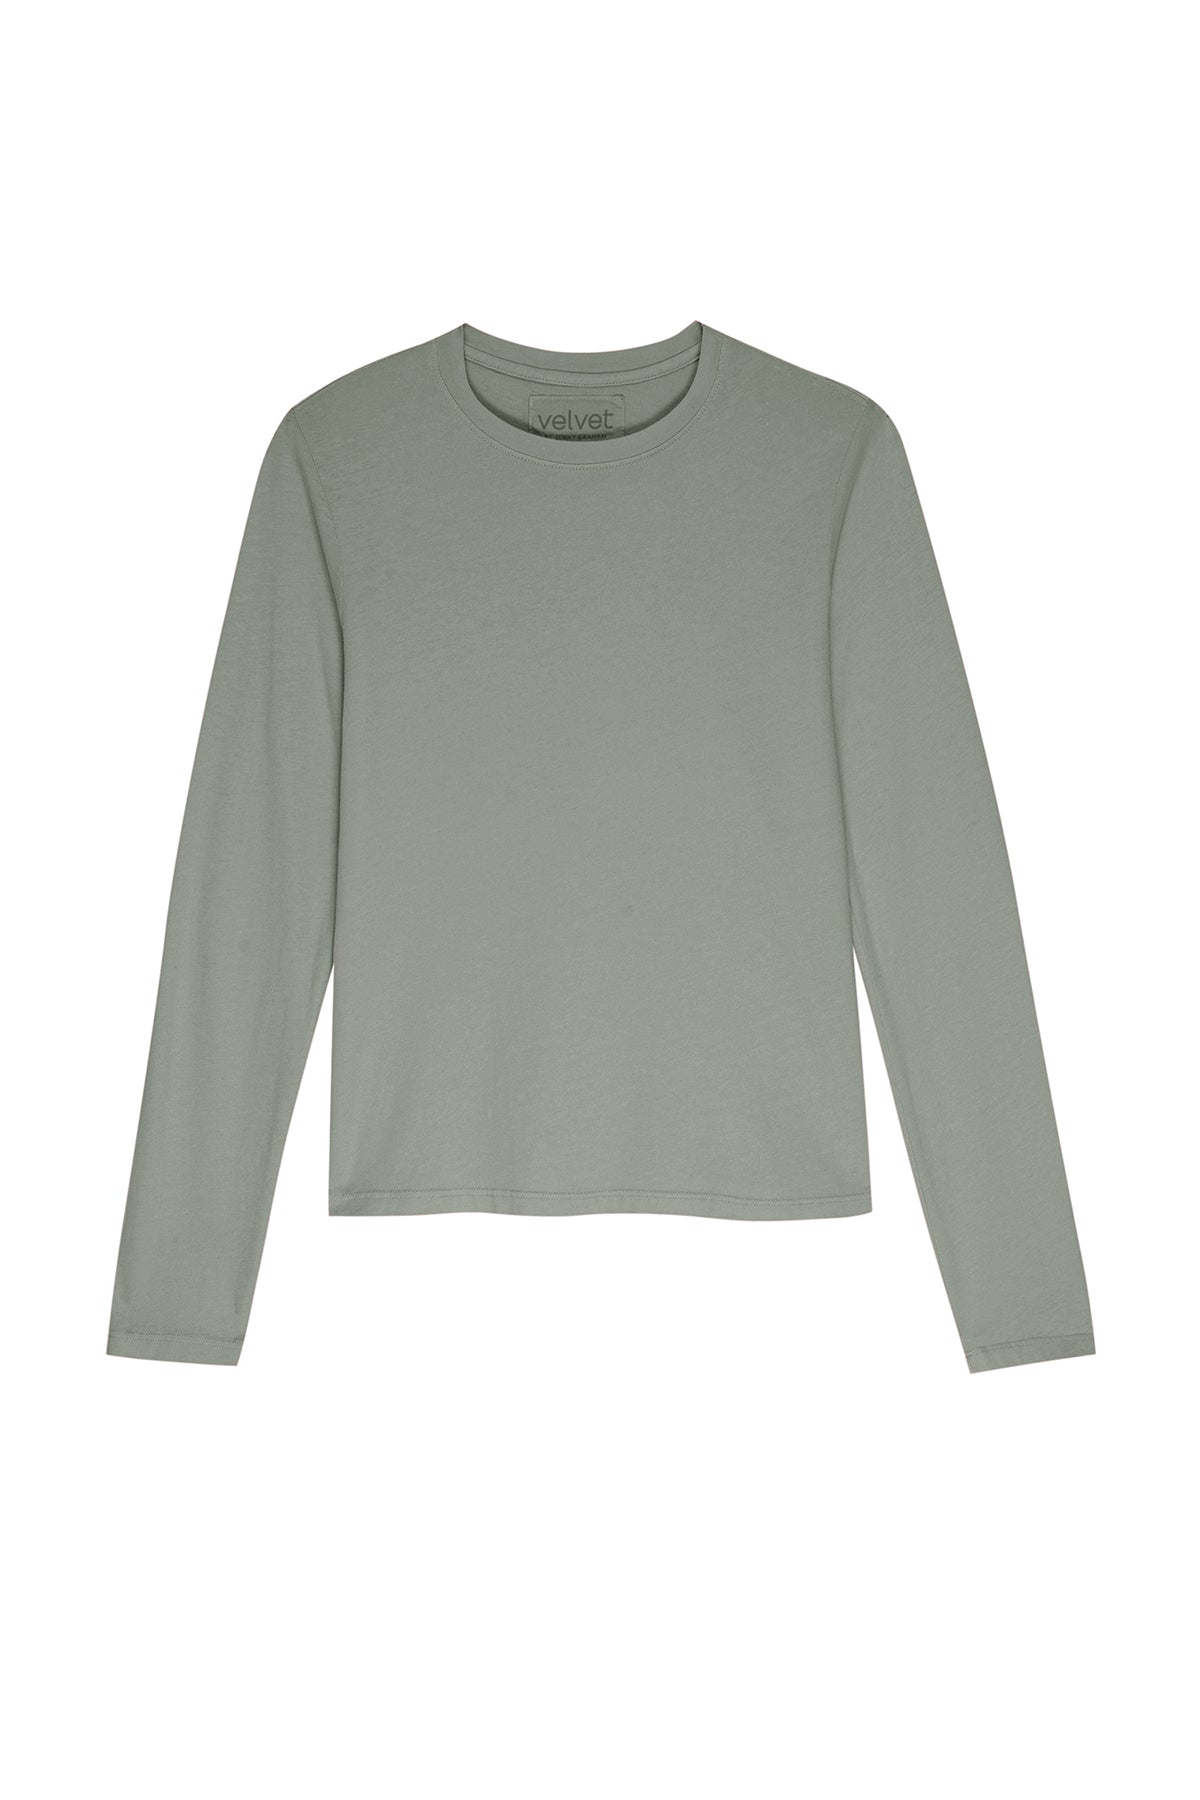 the Velvet by Jenny Graham women's long-sleeved sage green VICENTE TEE sweatshirt.-24427644158145